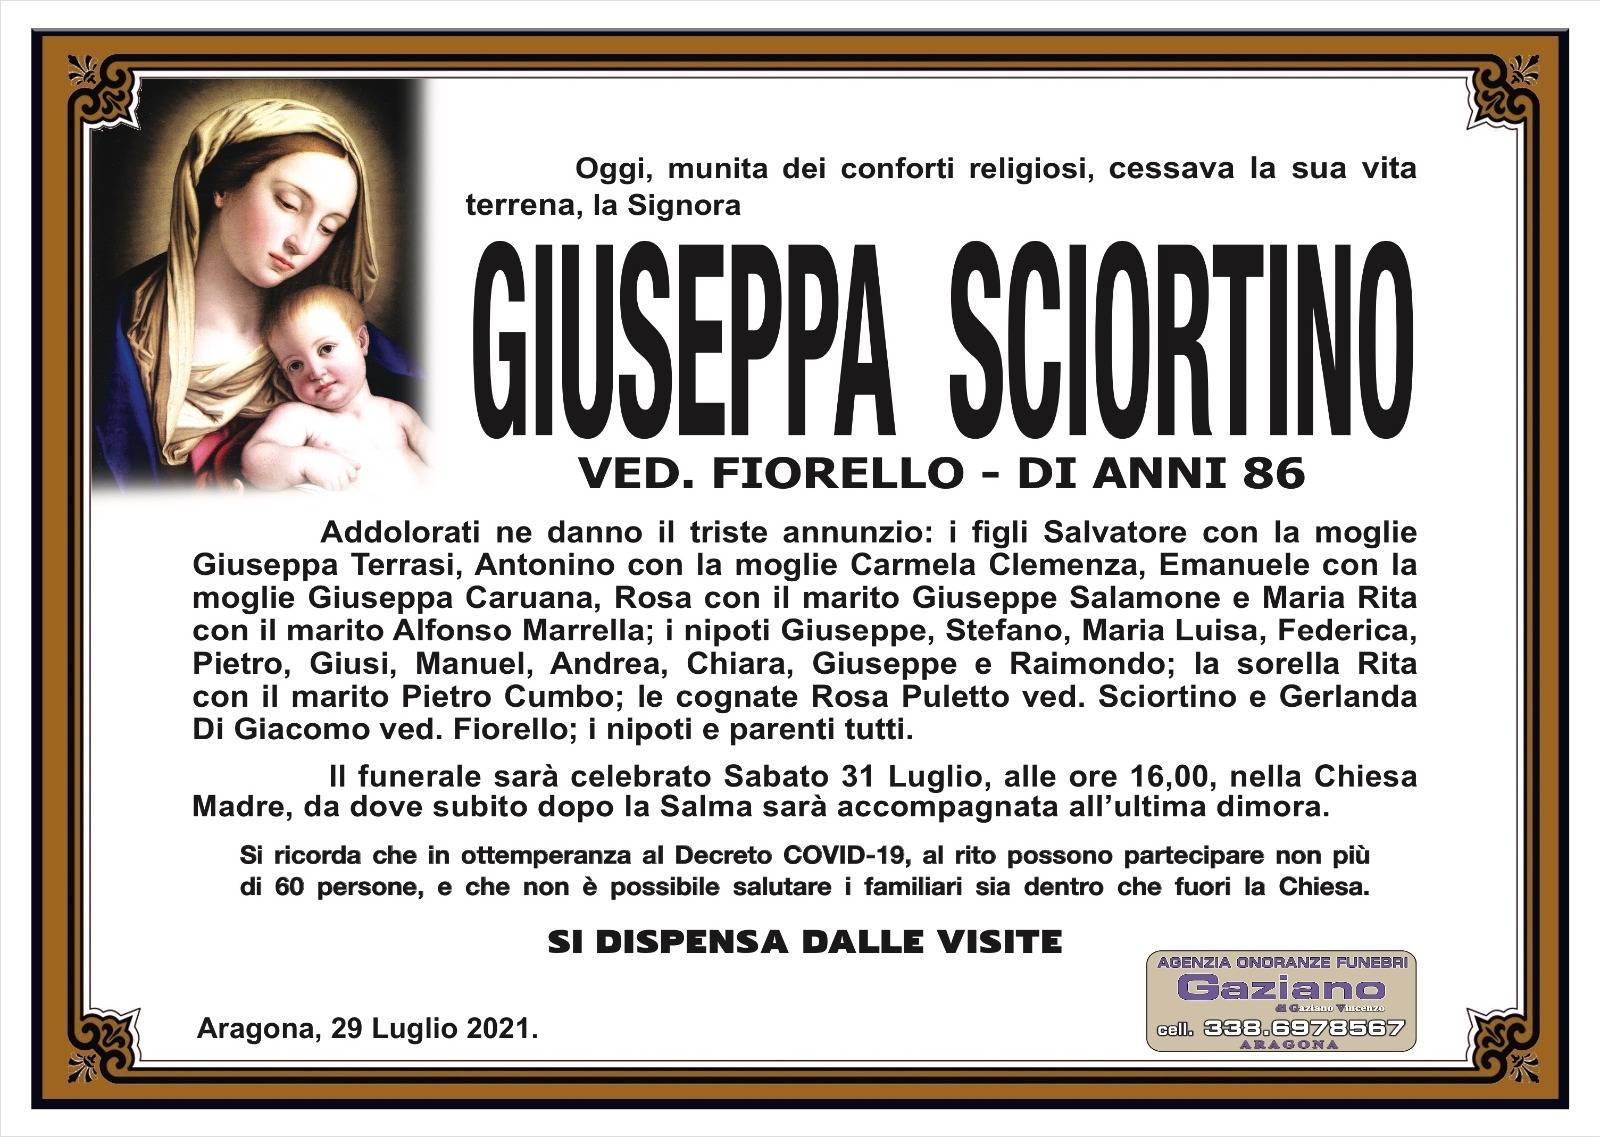 Giuseppa Sciortino